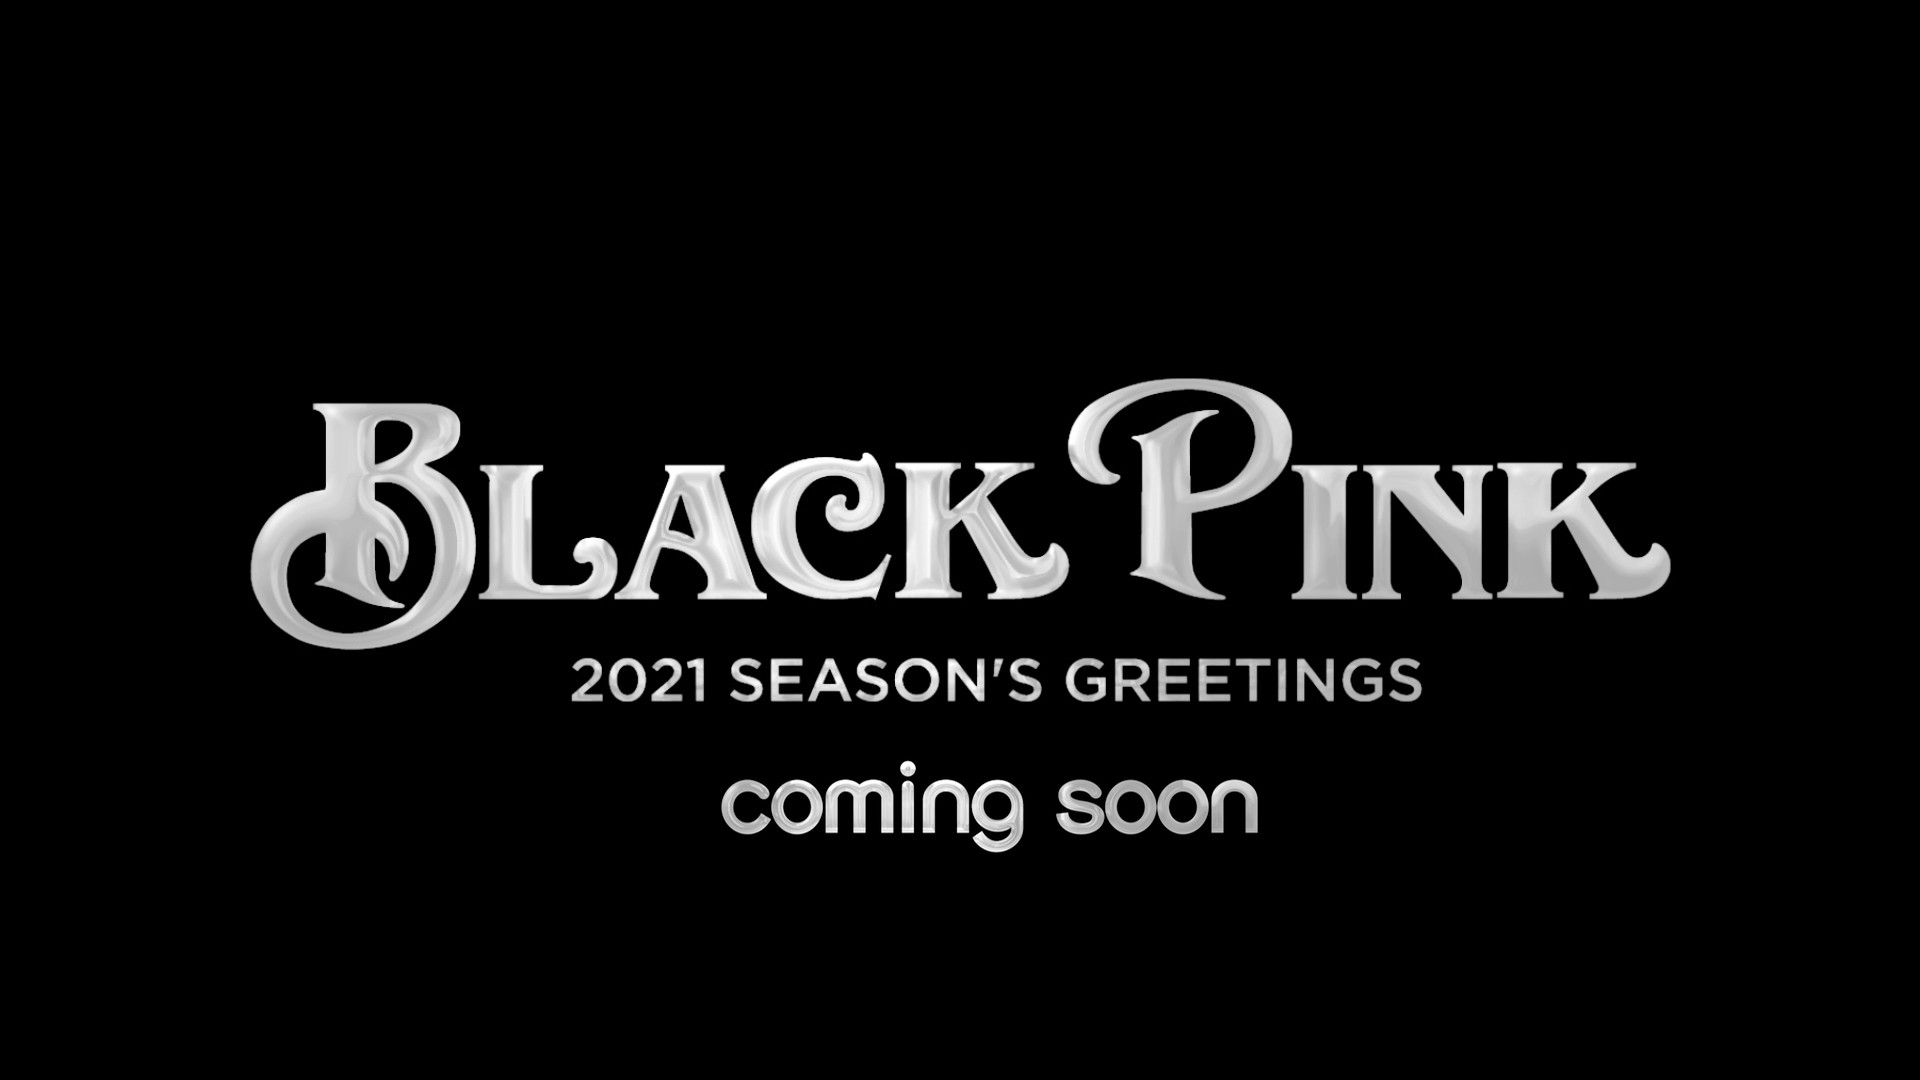 BLACKPINK 2021 SEASON'S GREETINGS PREVIEW